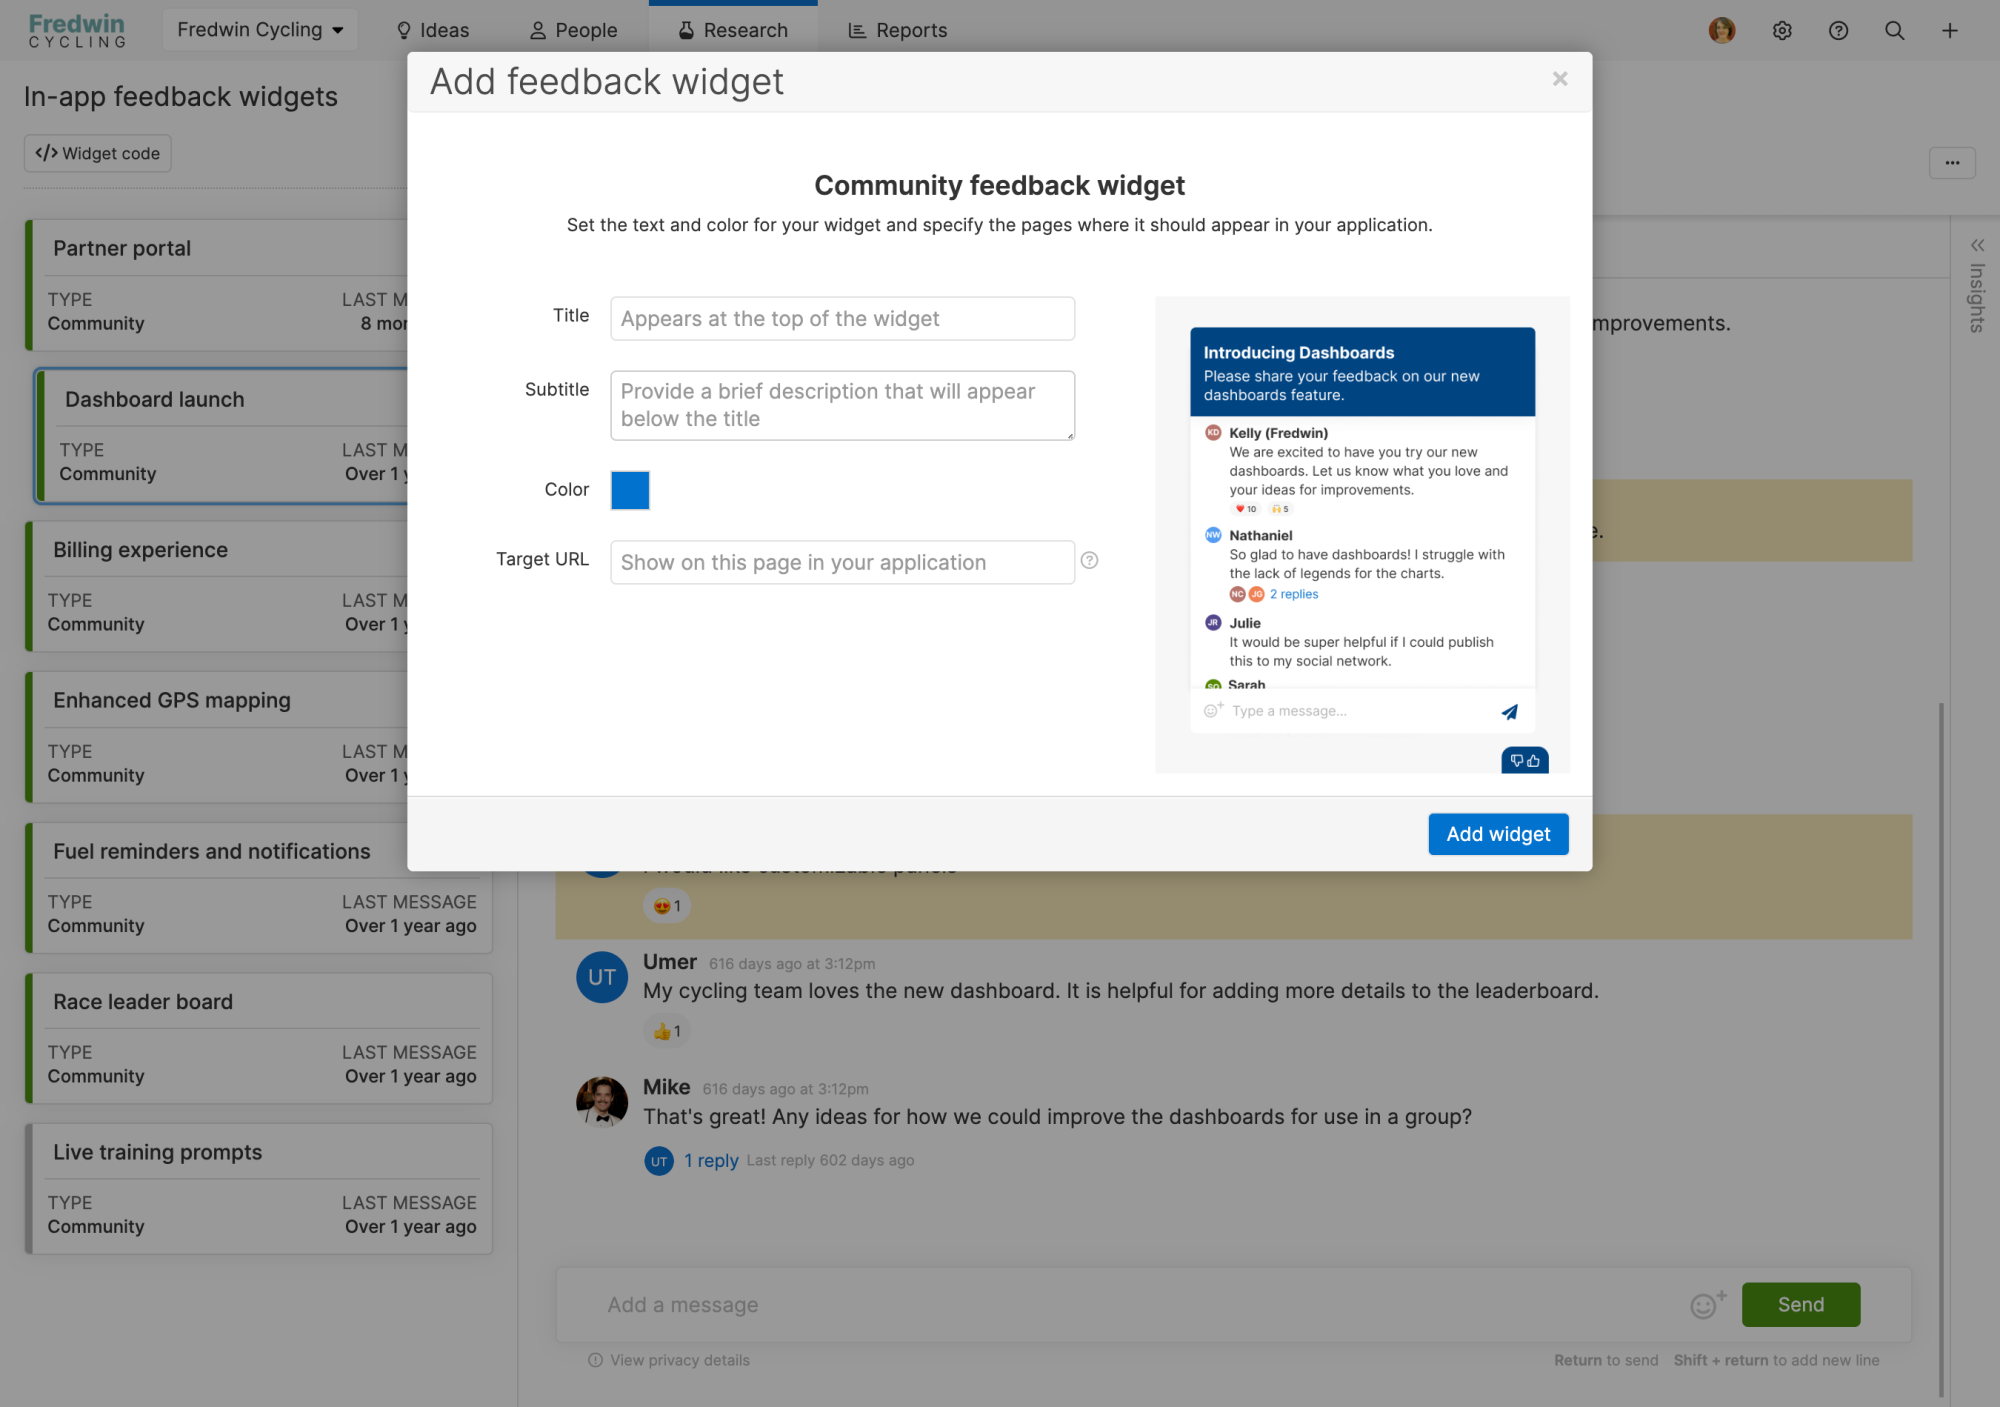 The Add feedback widget modal in front of a feedback widget details view.